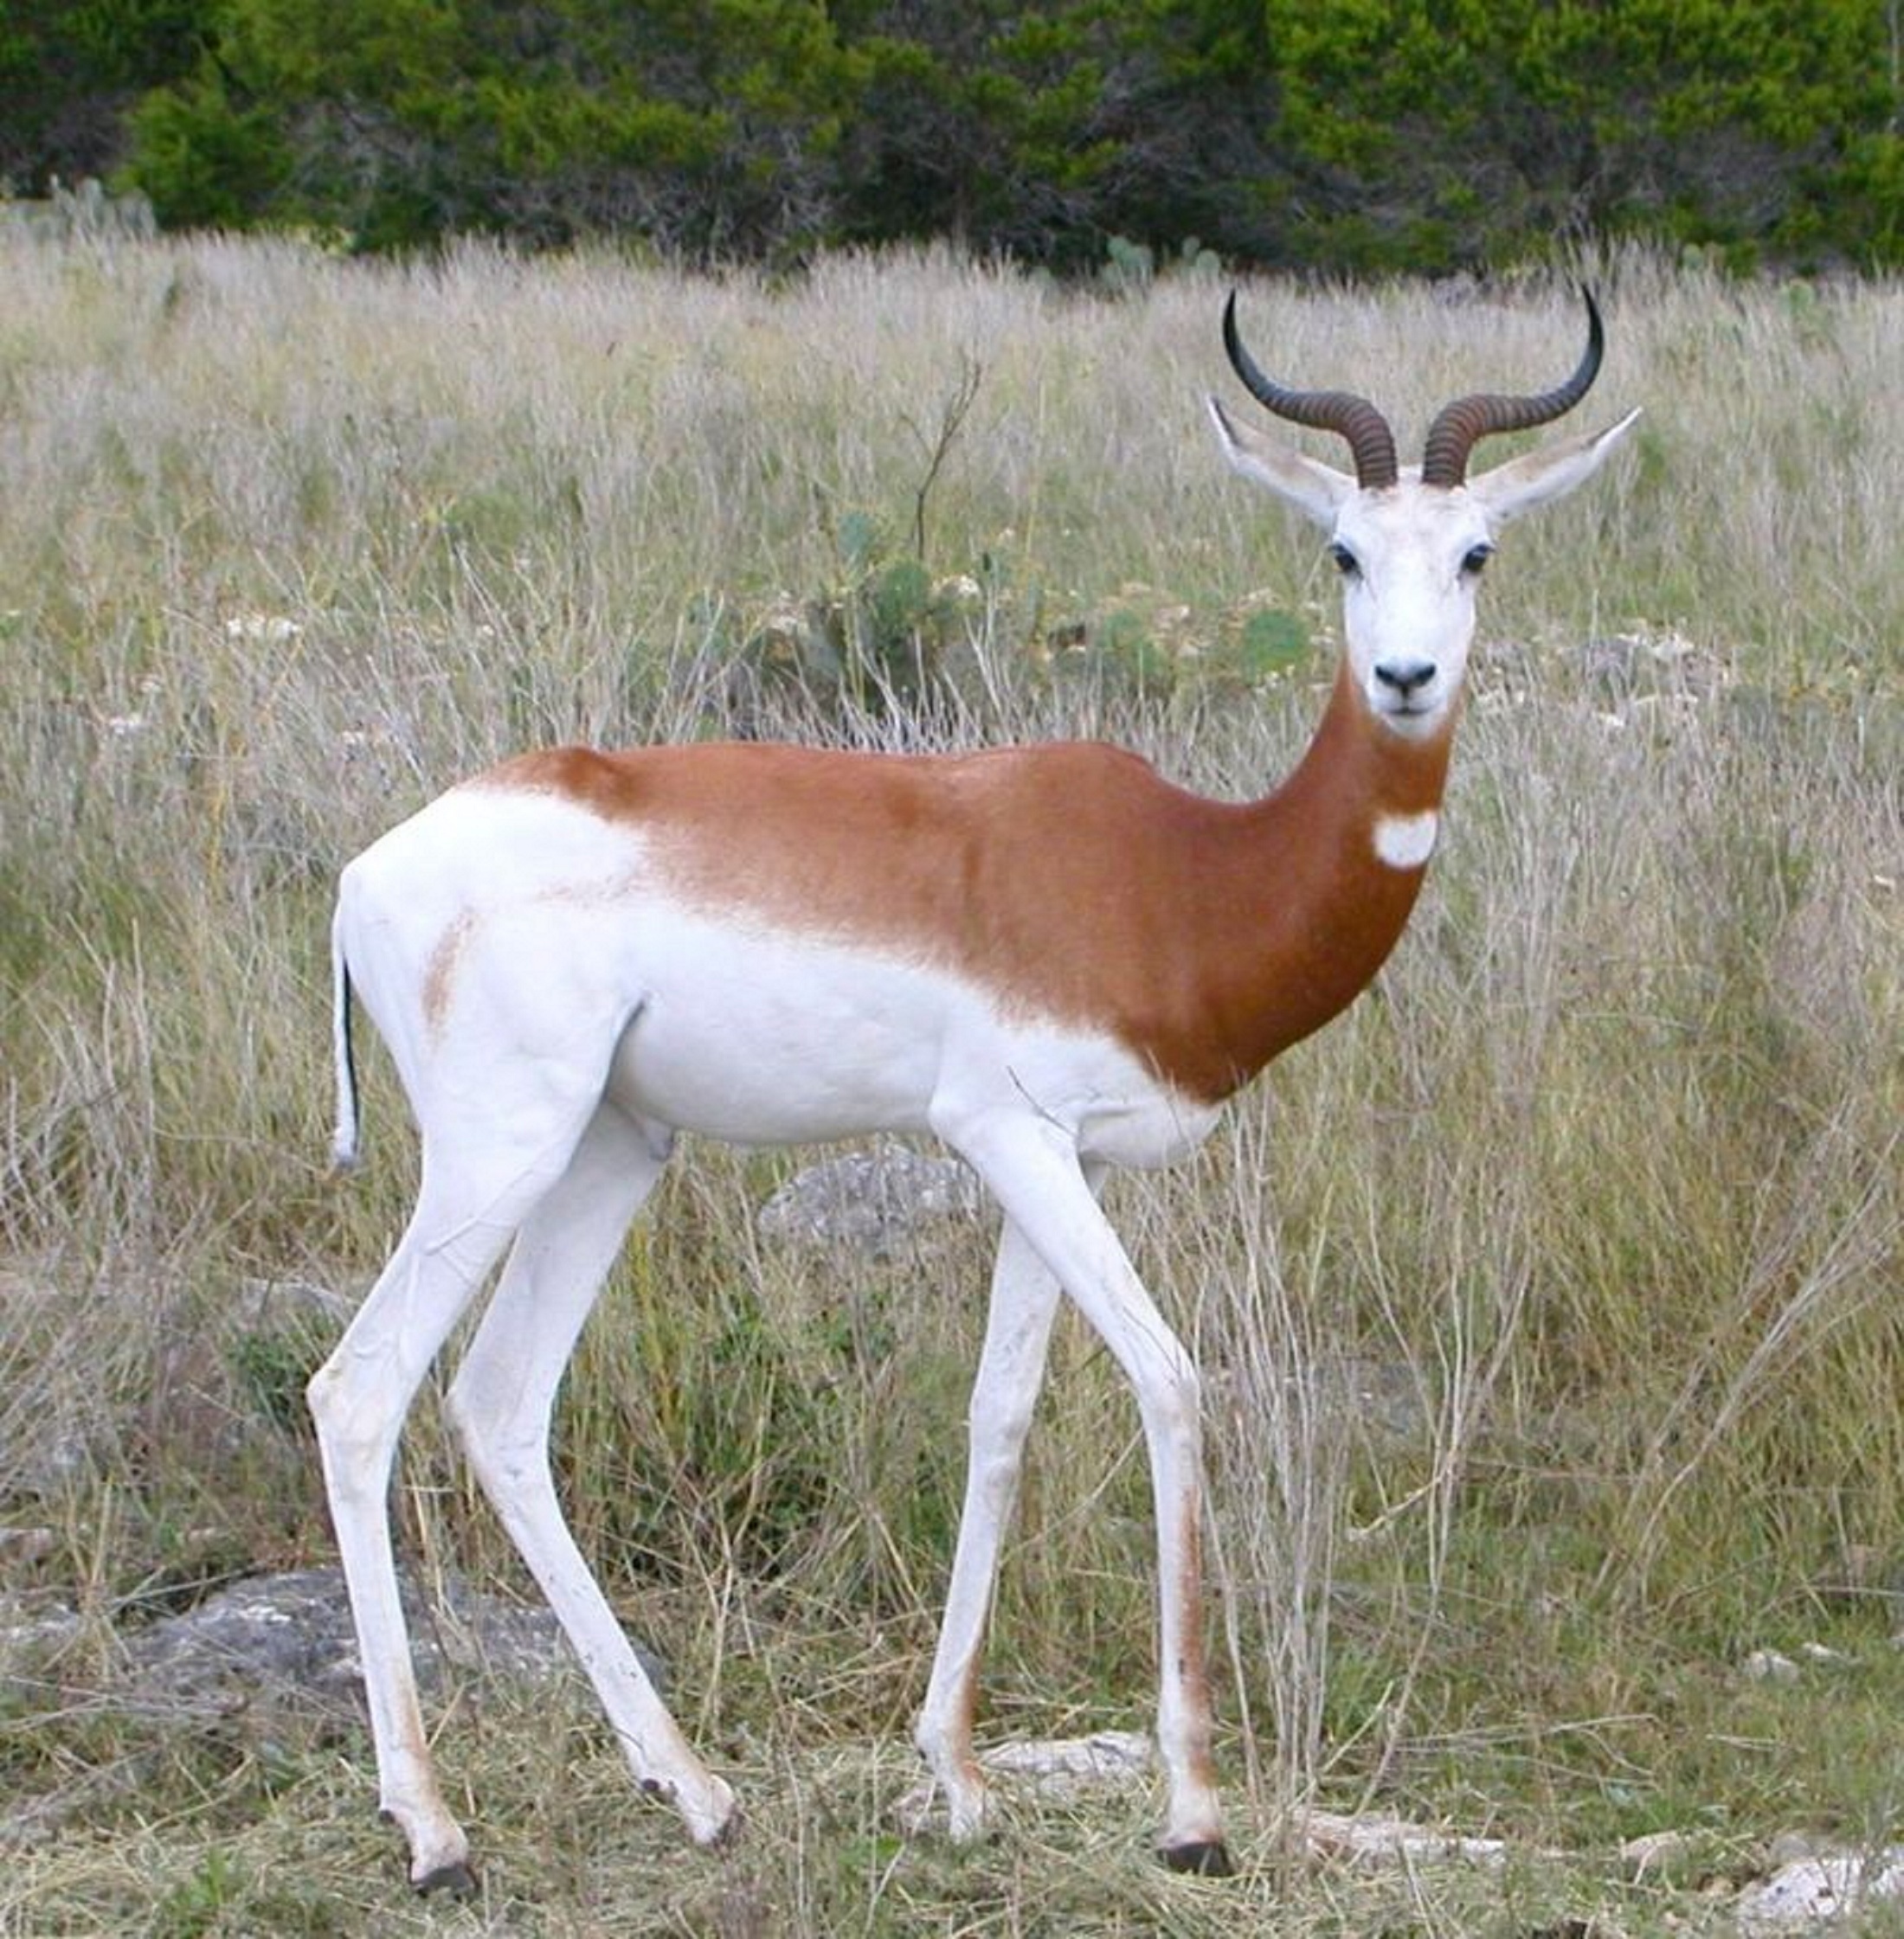 Springbok, Animal, Deer, Fast, Wild, HQ Photo